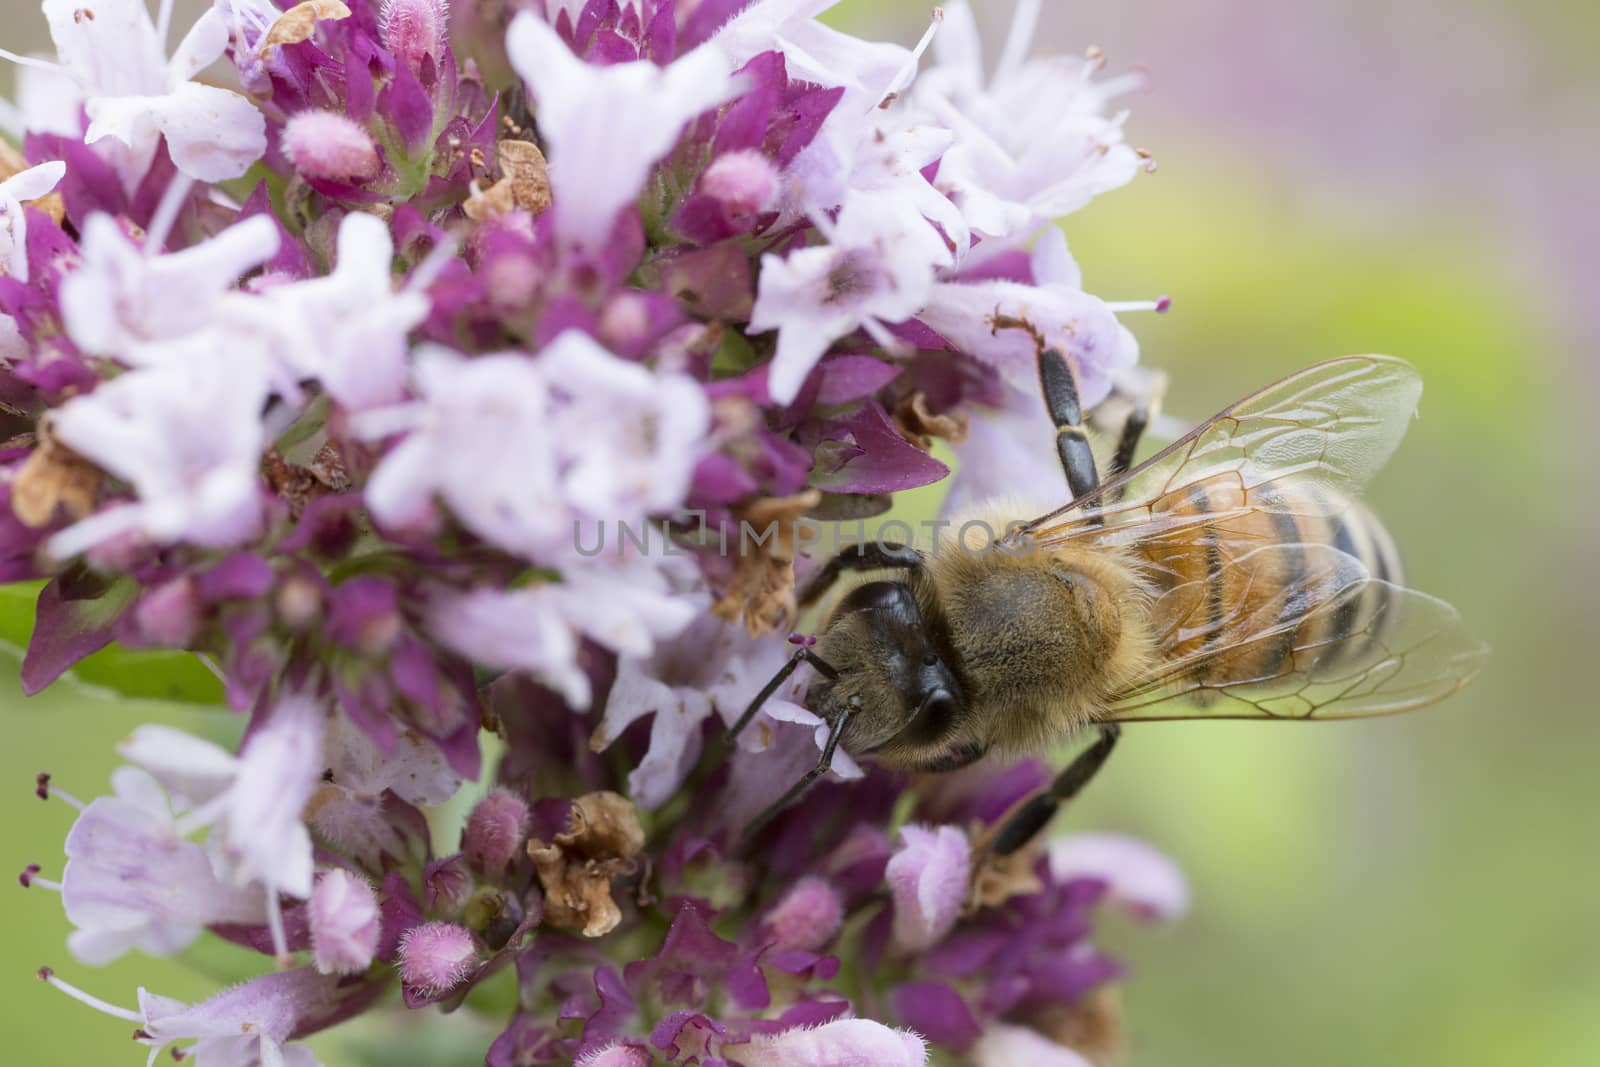 Honey bee on plant by mattkusb